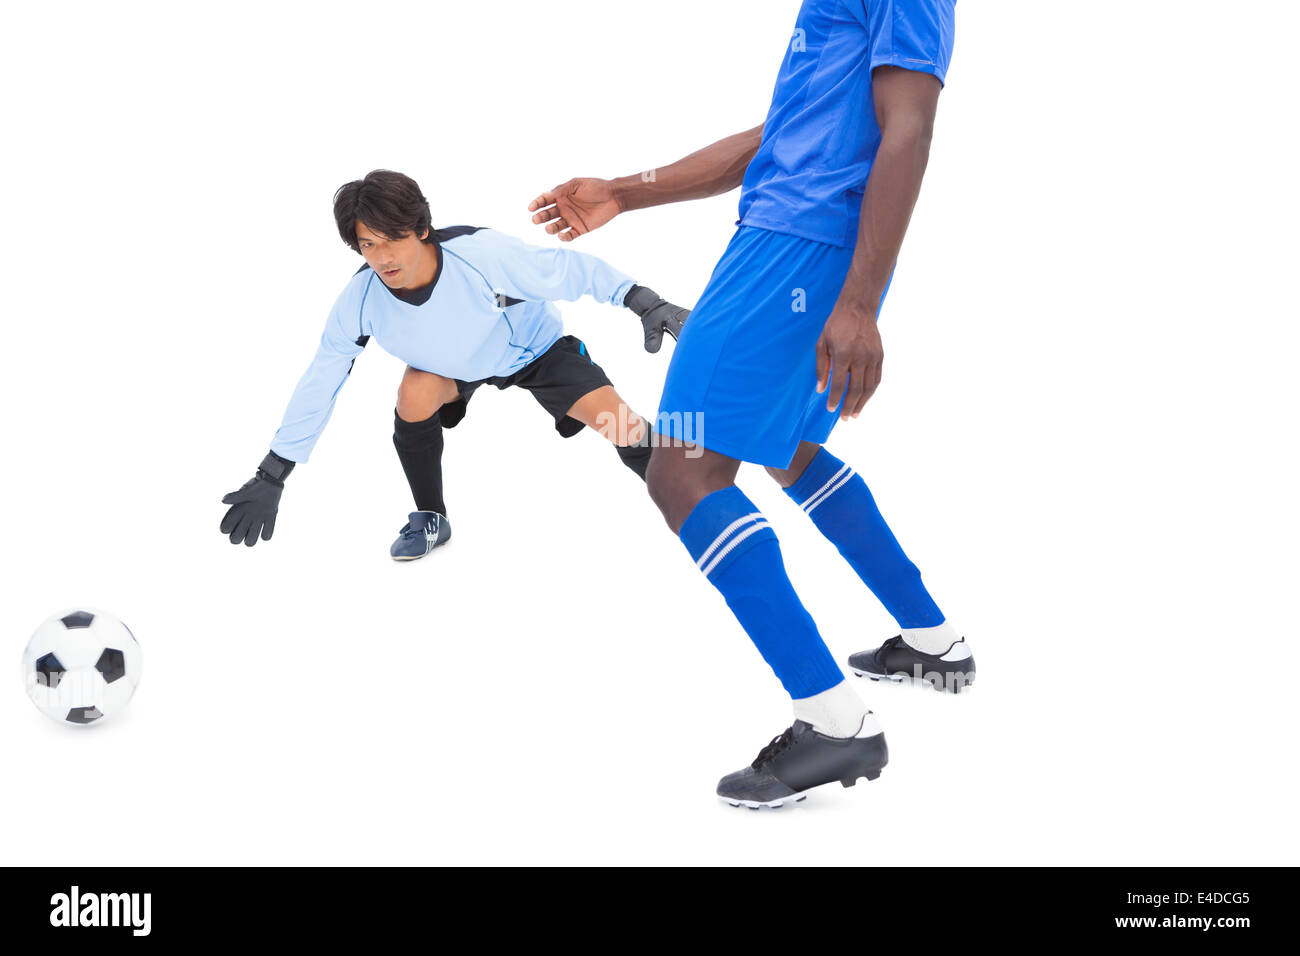 Football-Spieler in blau fällt am keeper Stockfoto